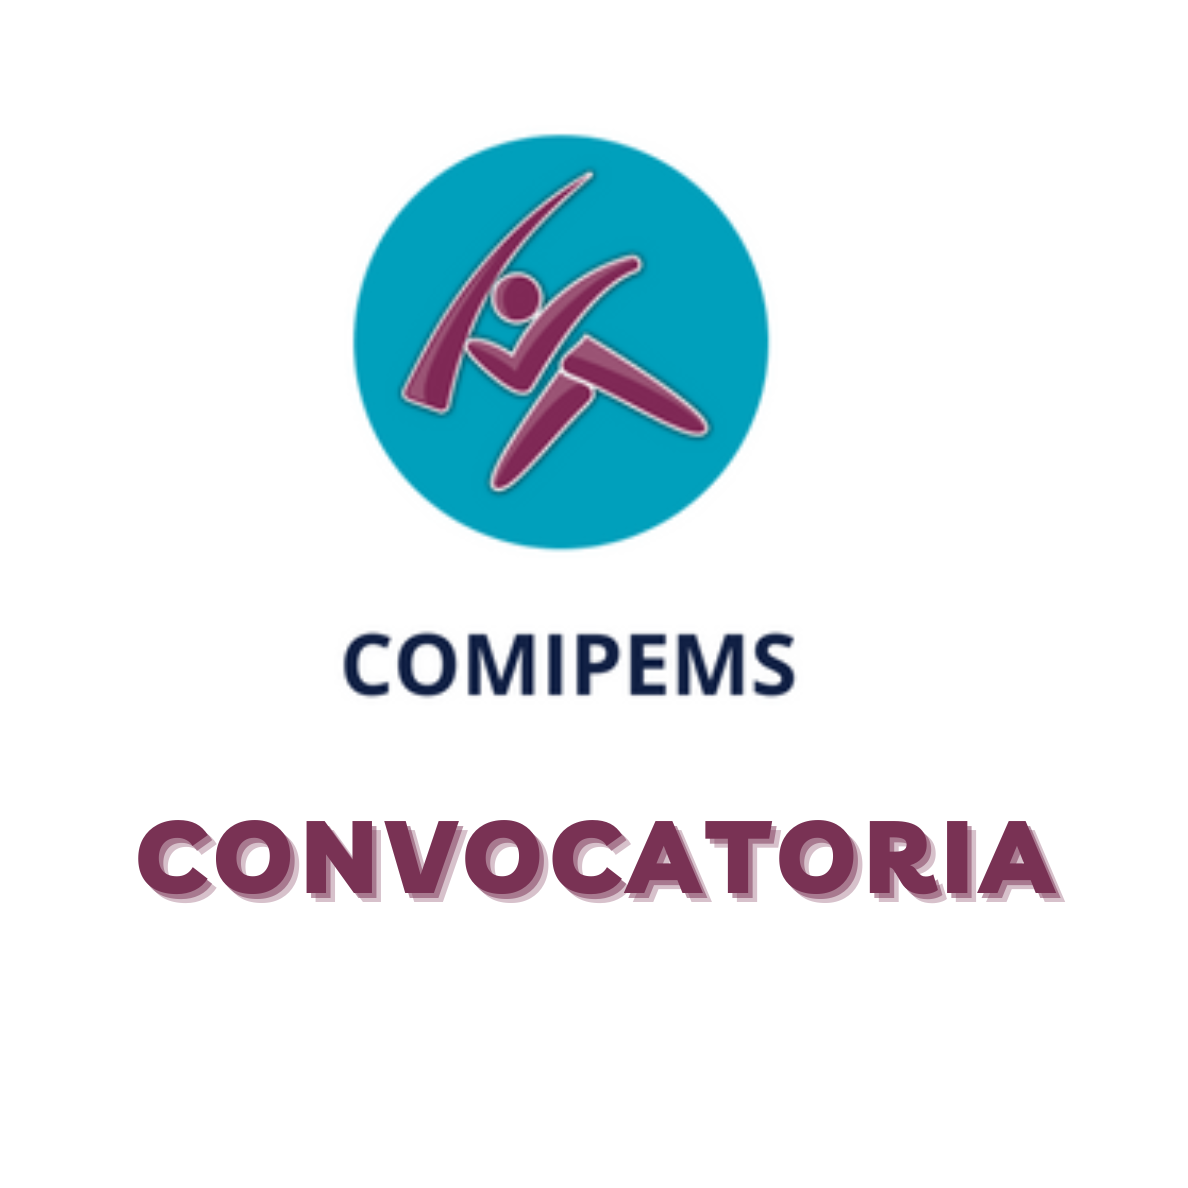 37 COMIPEMS CONVOCATORIA